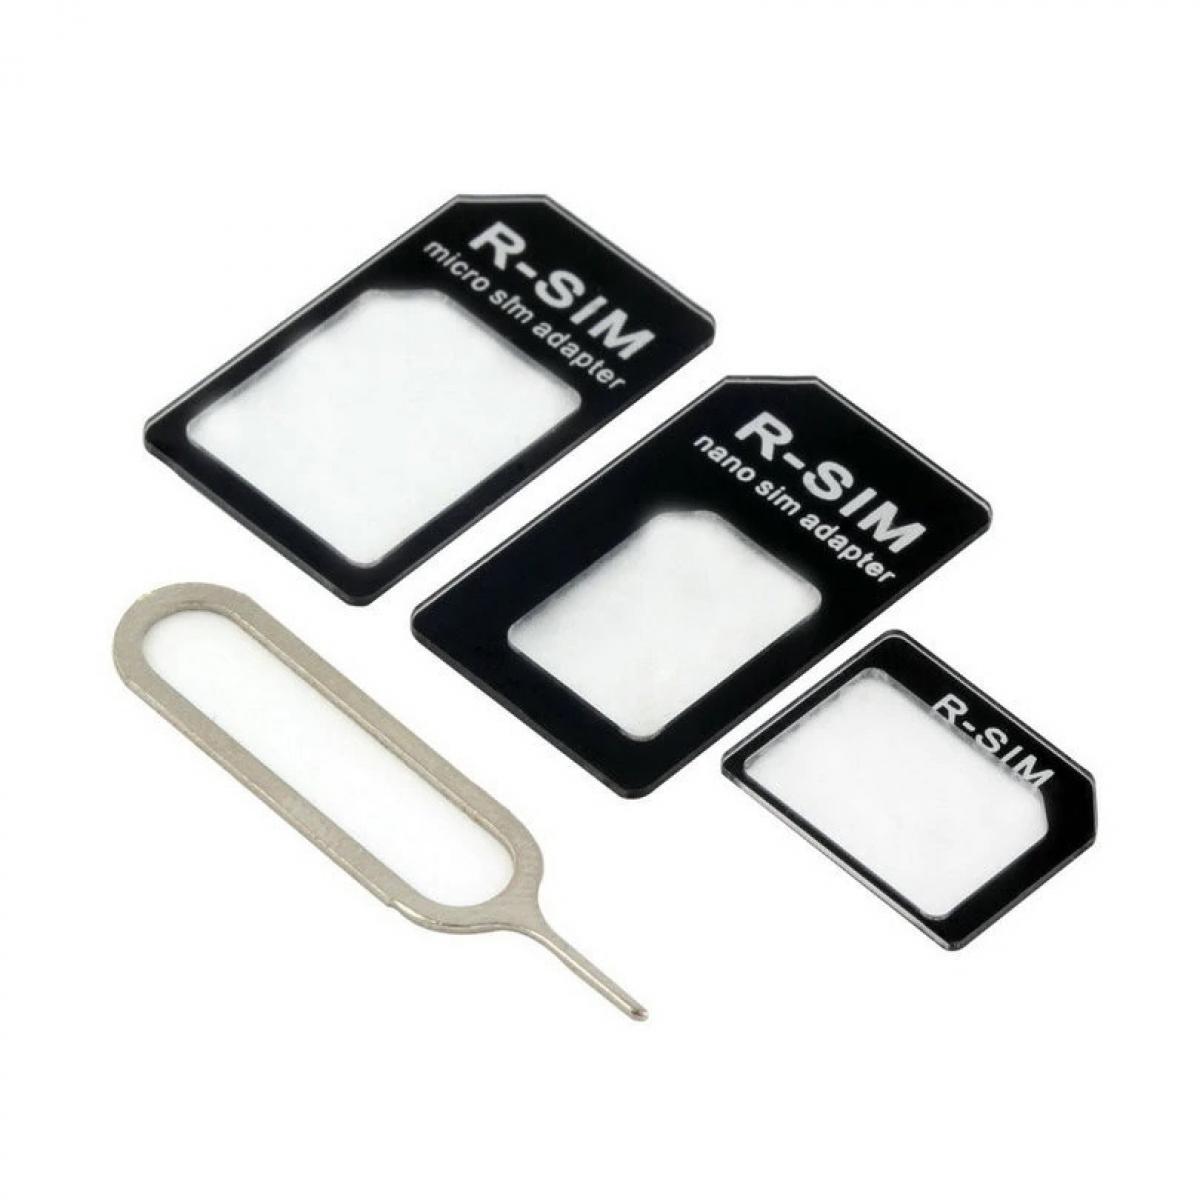 Shot - Adaptateur de carte SIM 3 en 1 pour "SAMSUNG Galaxy Z Fold 2" Smartphone Micro-SIM Nano-SIM - Autres accessoires smartphone